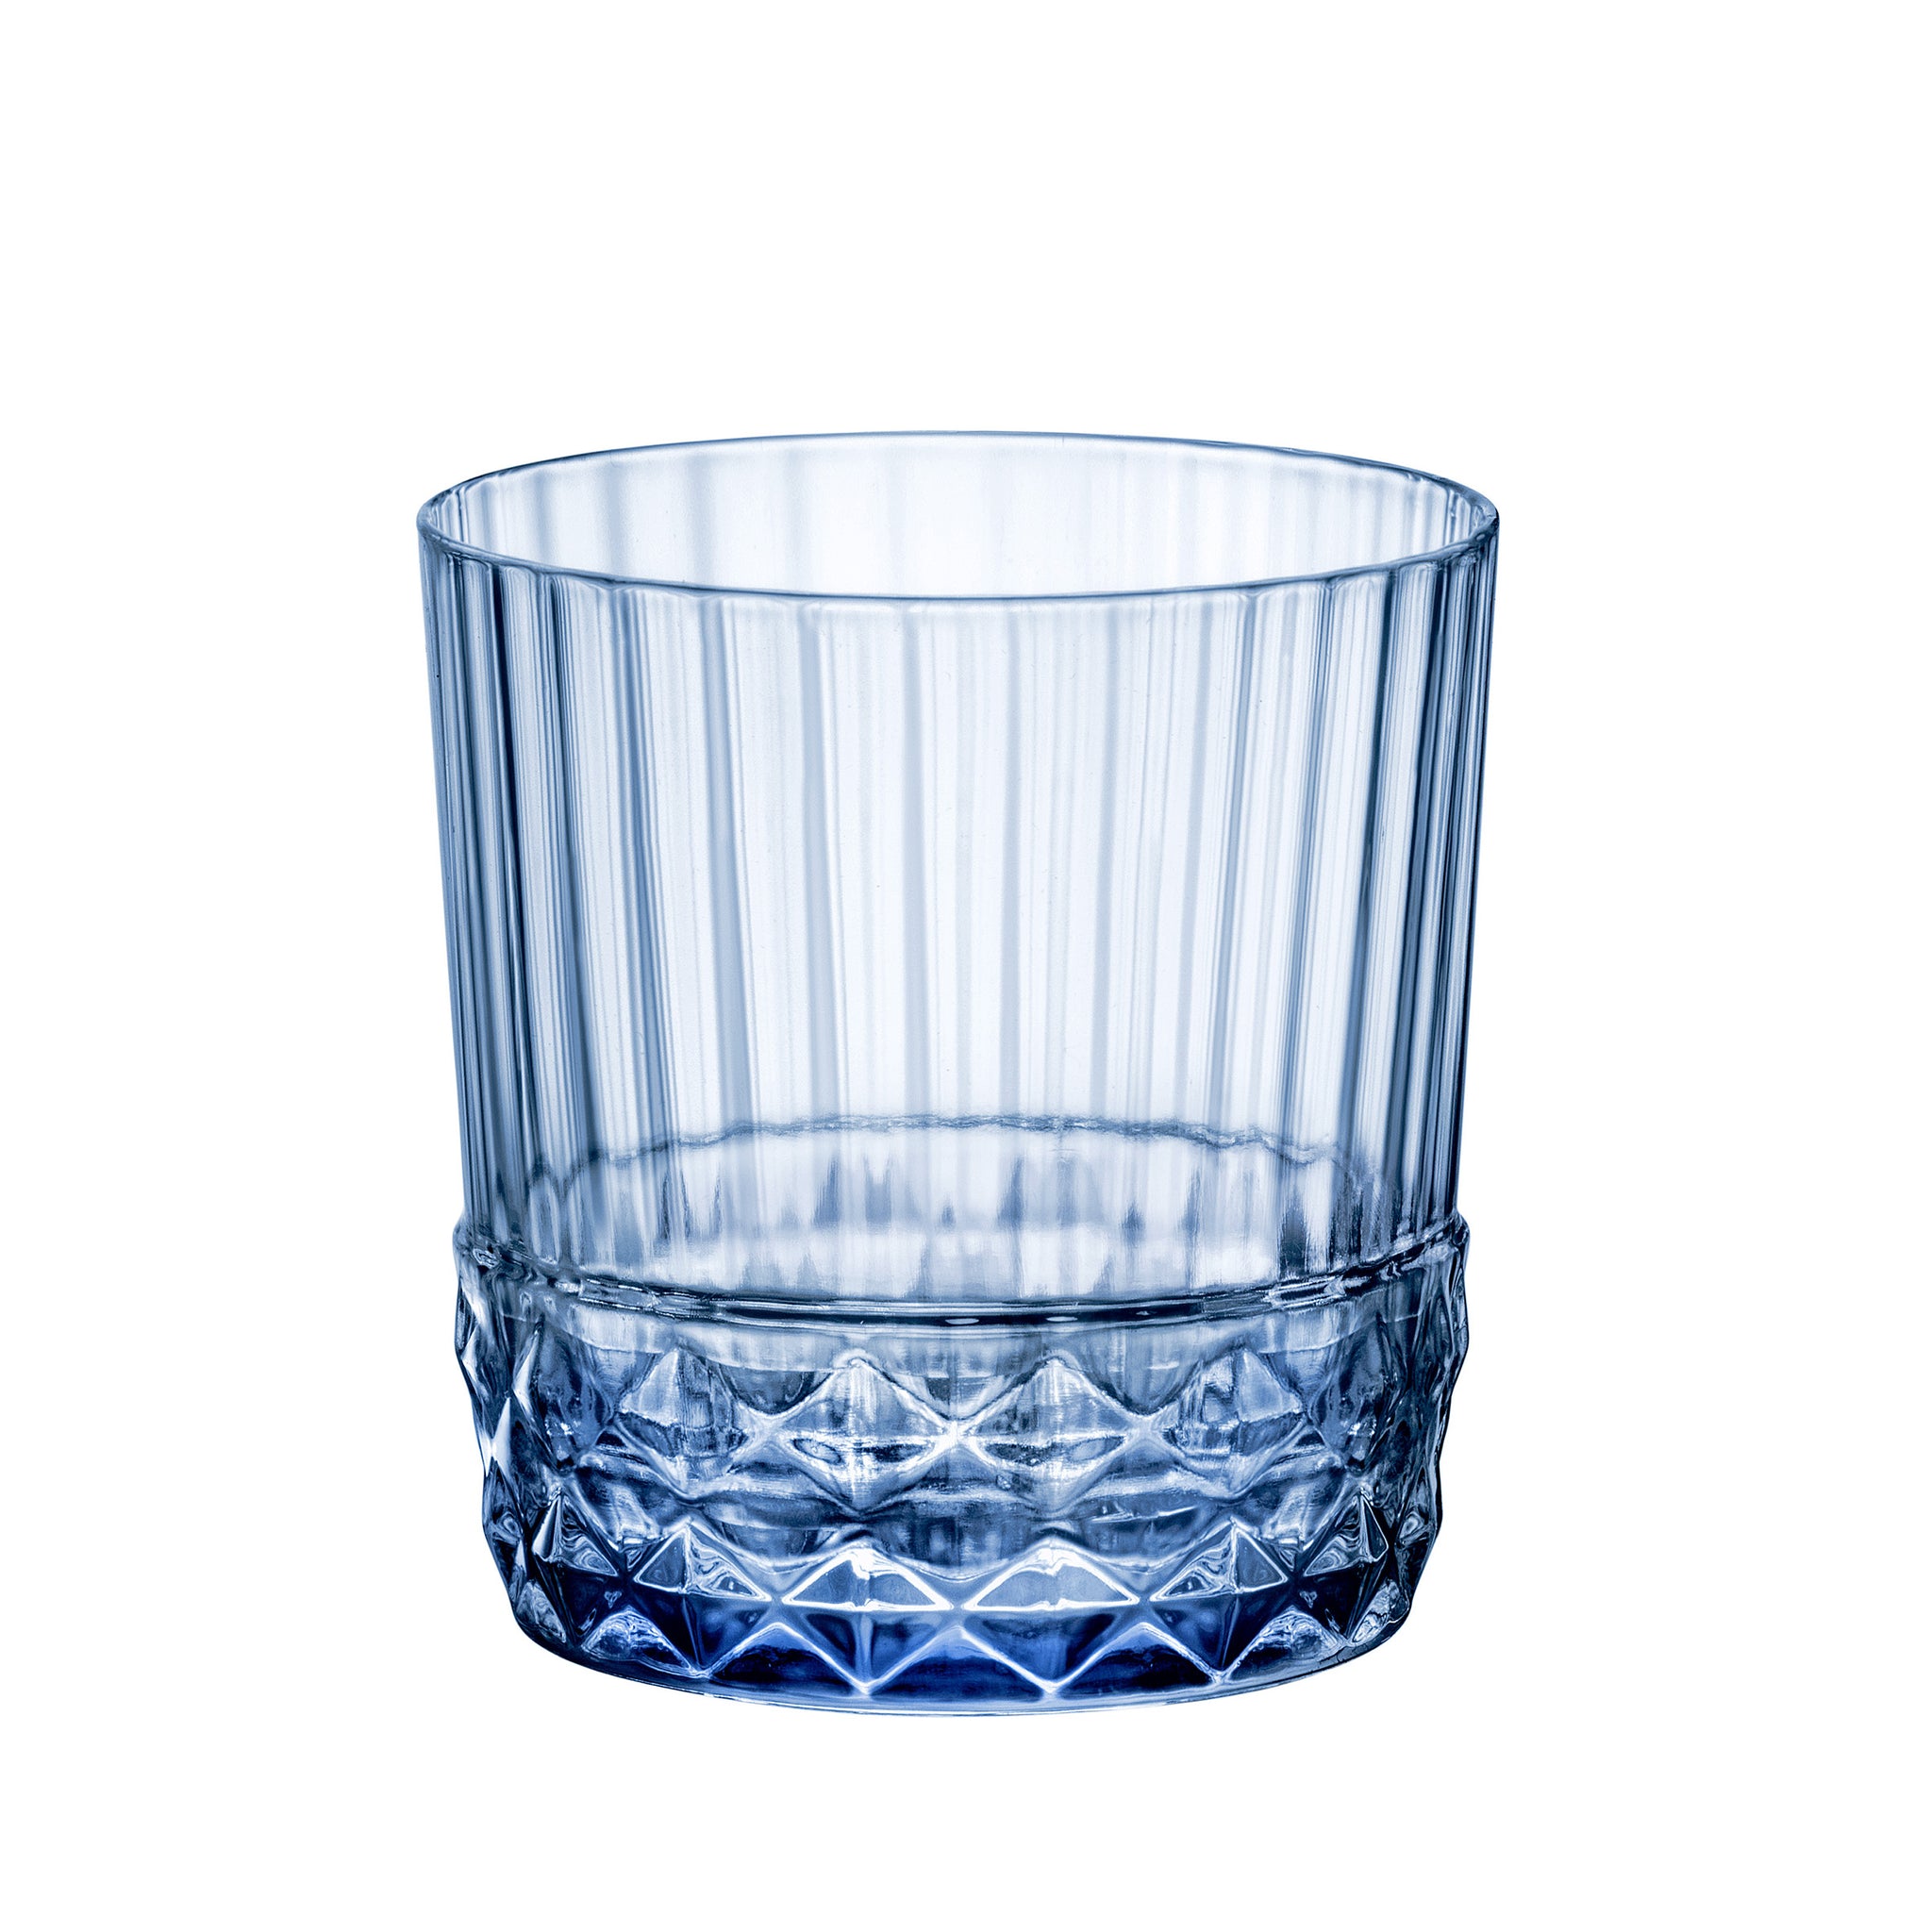 America '20s 12.5 oz. DOF Drinking Glasses, Sapphire Blue (Set of 6)